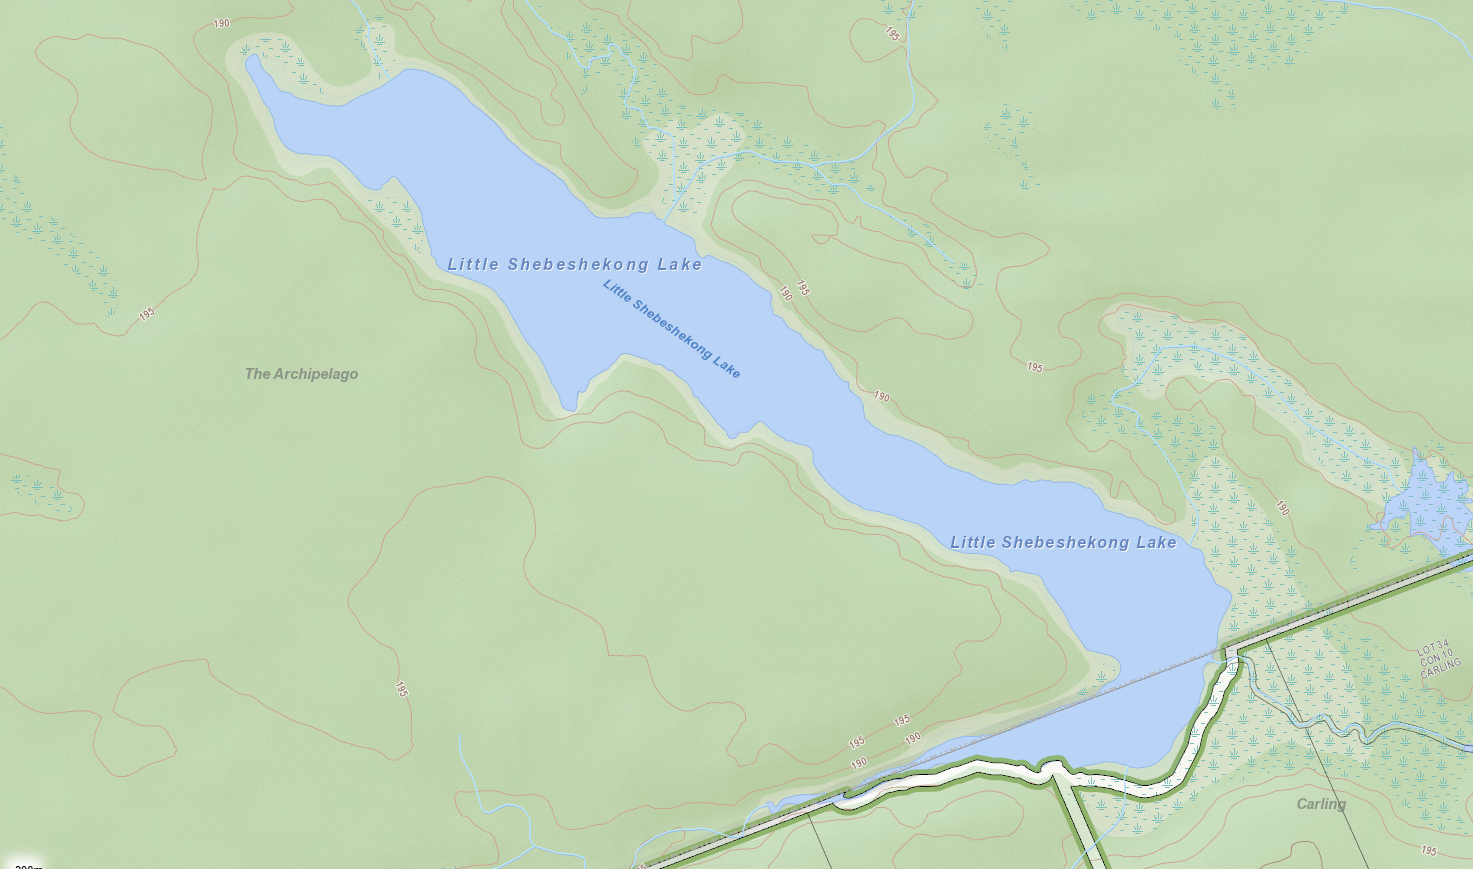 Little Shebeshekong Lake Cadastral Map - Little Shebeshekong Lake - Muskoka